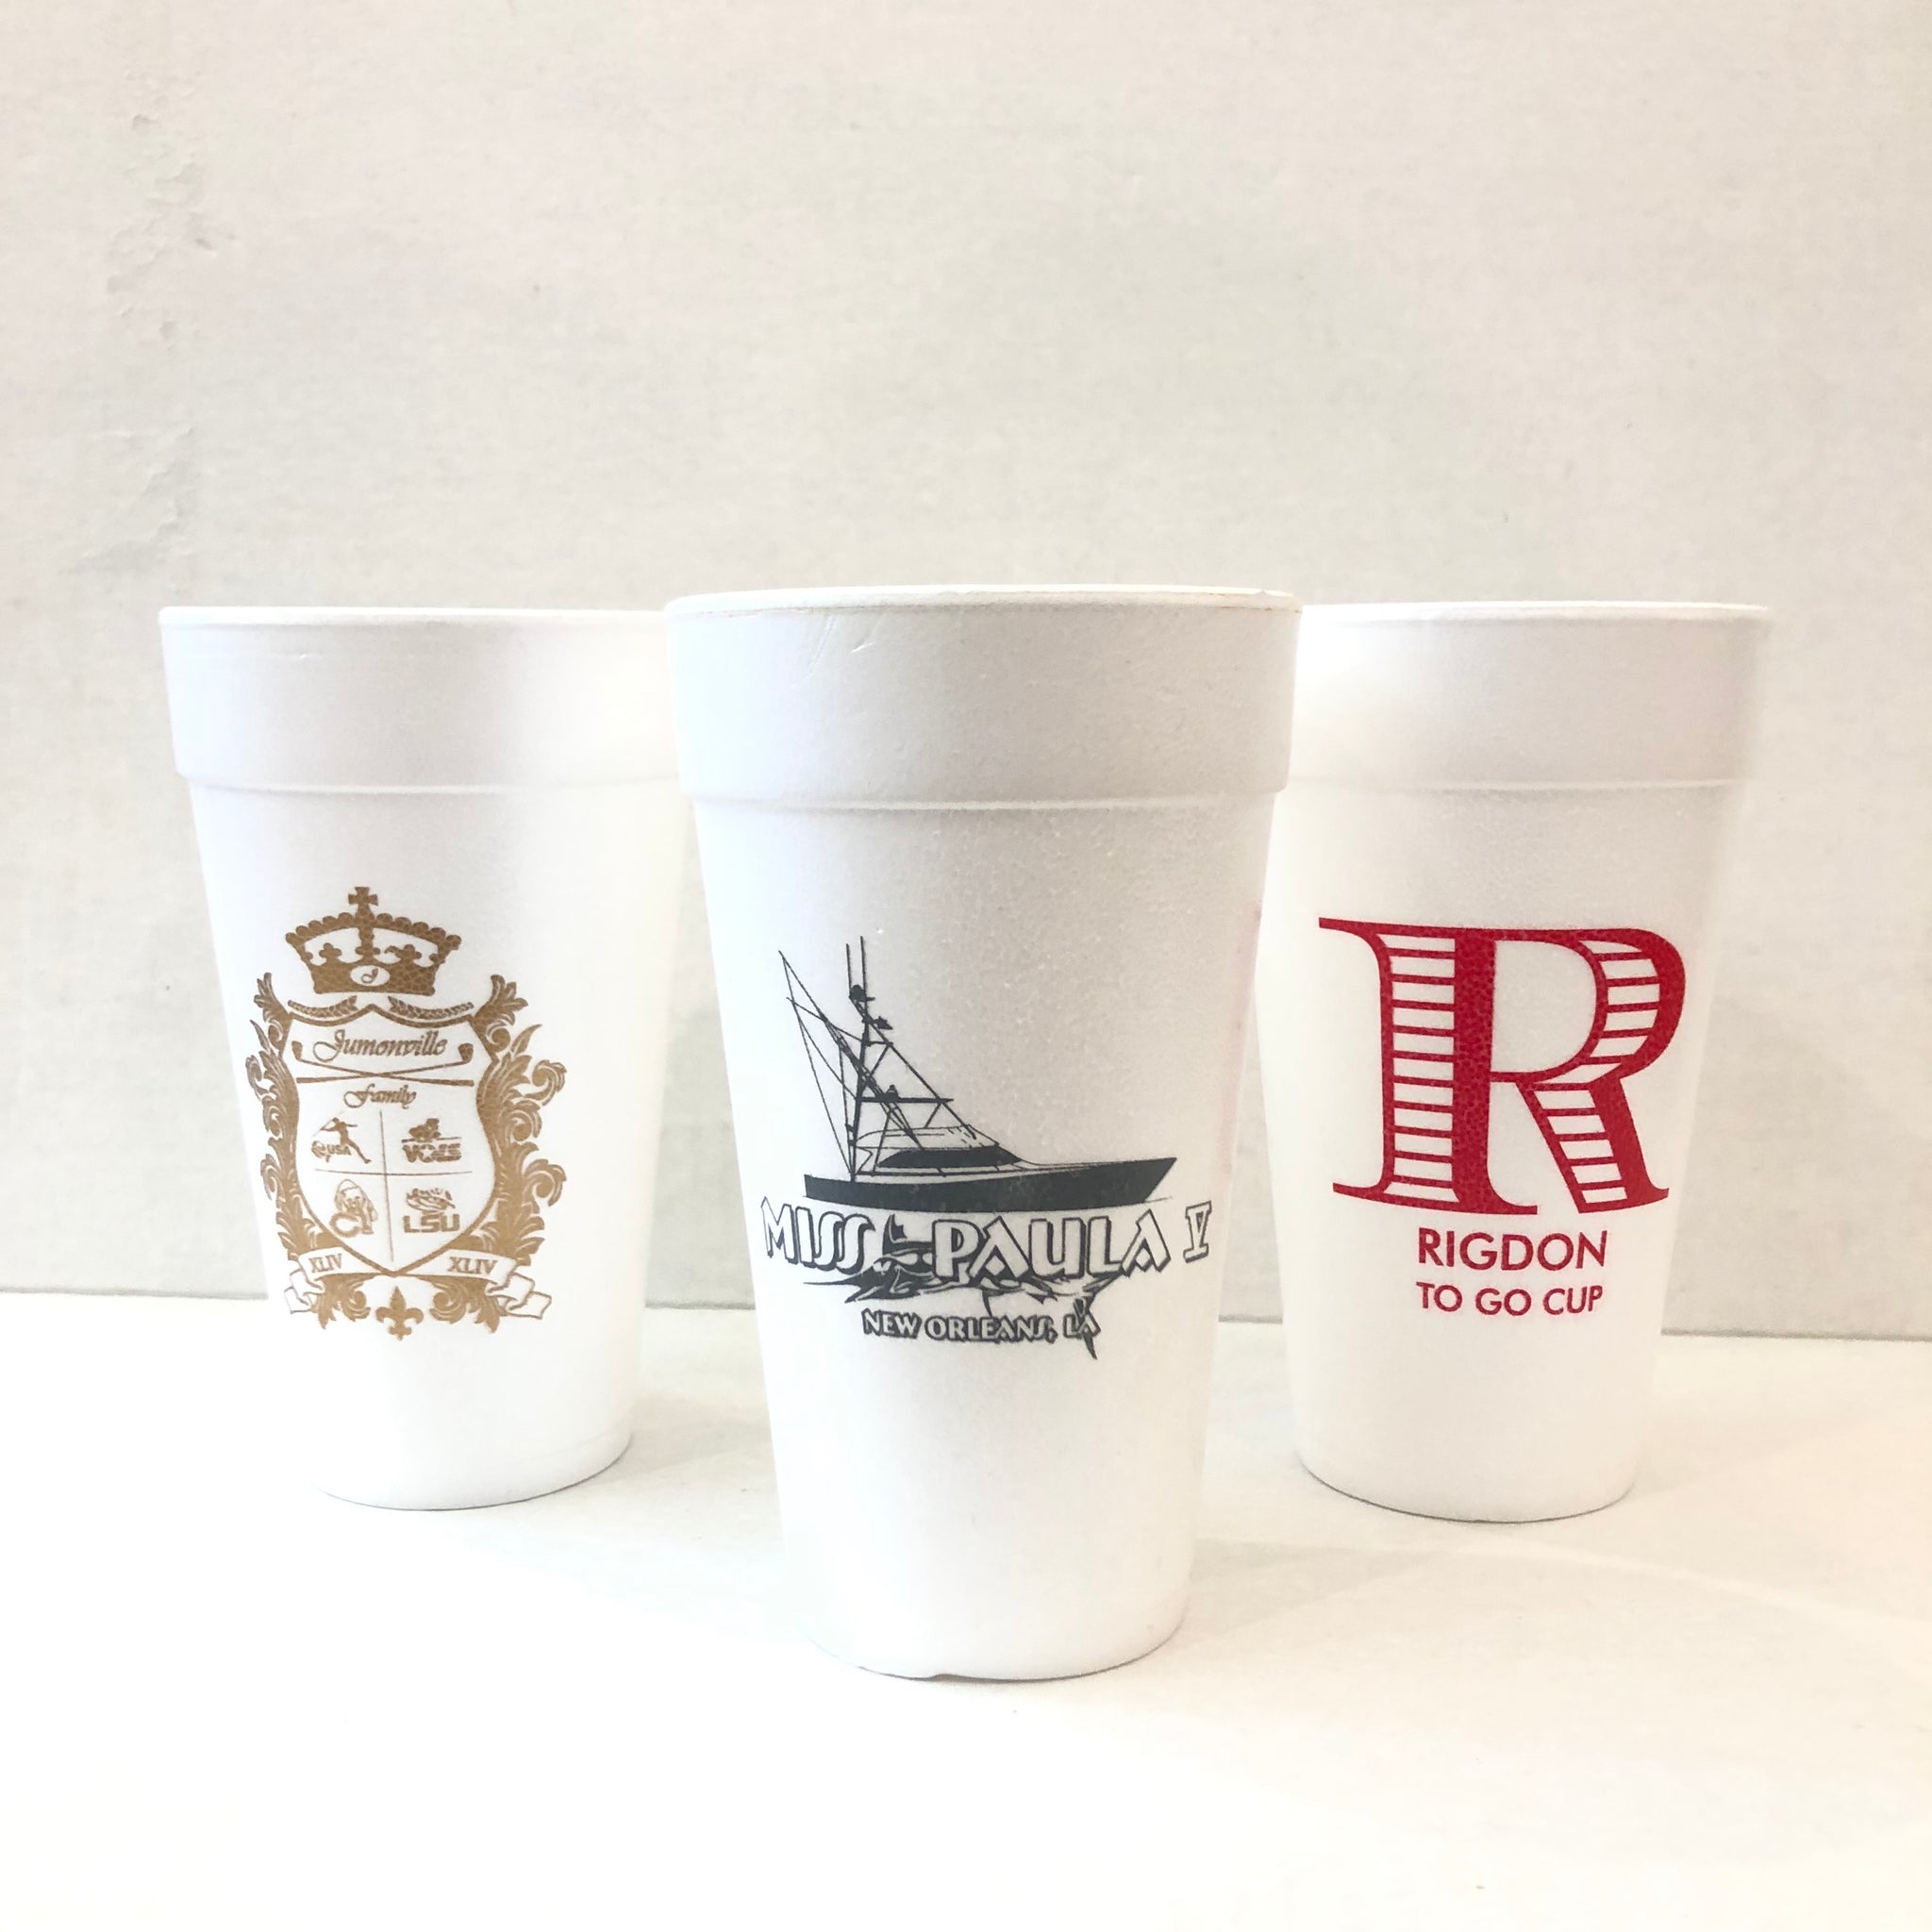 20oz. Styrofoam Cups – Frill Seekers Gifts